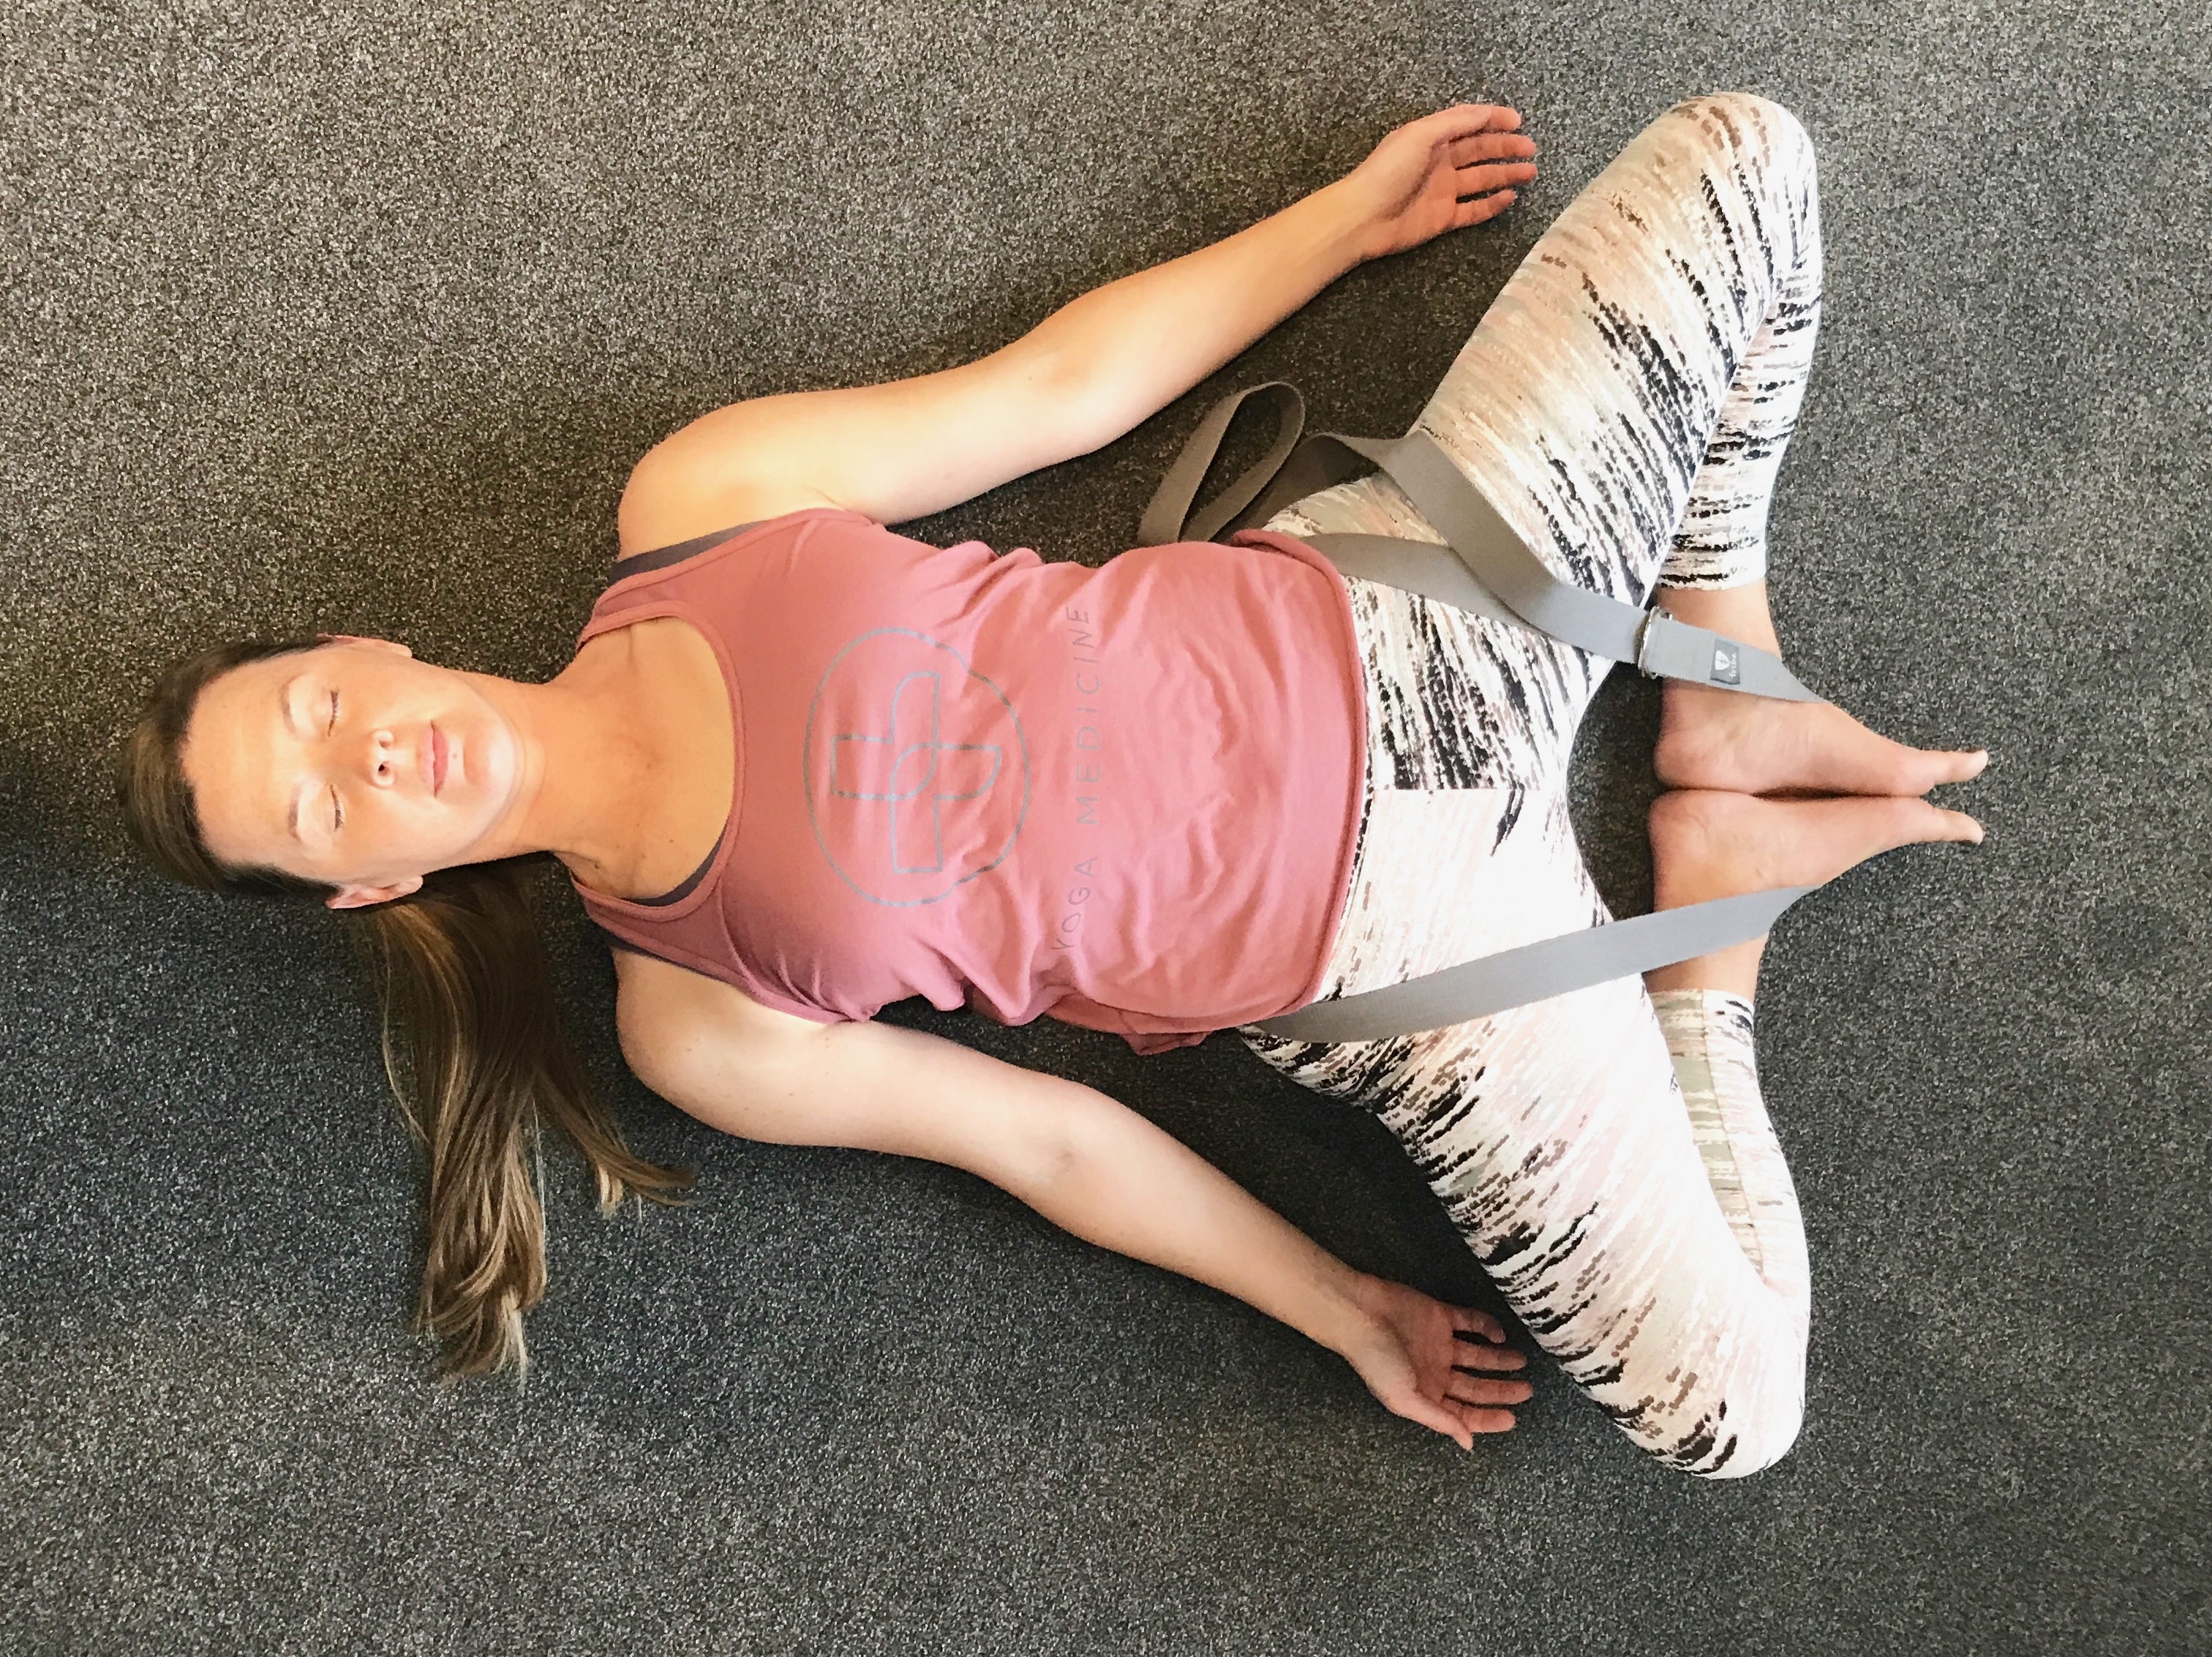 Yin Yoga For Depression | Rachel Scott